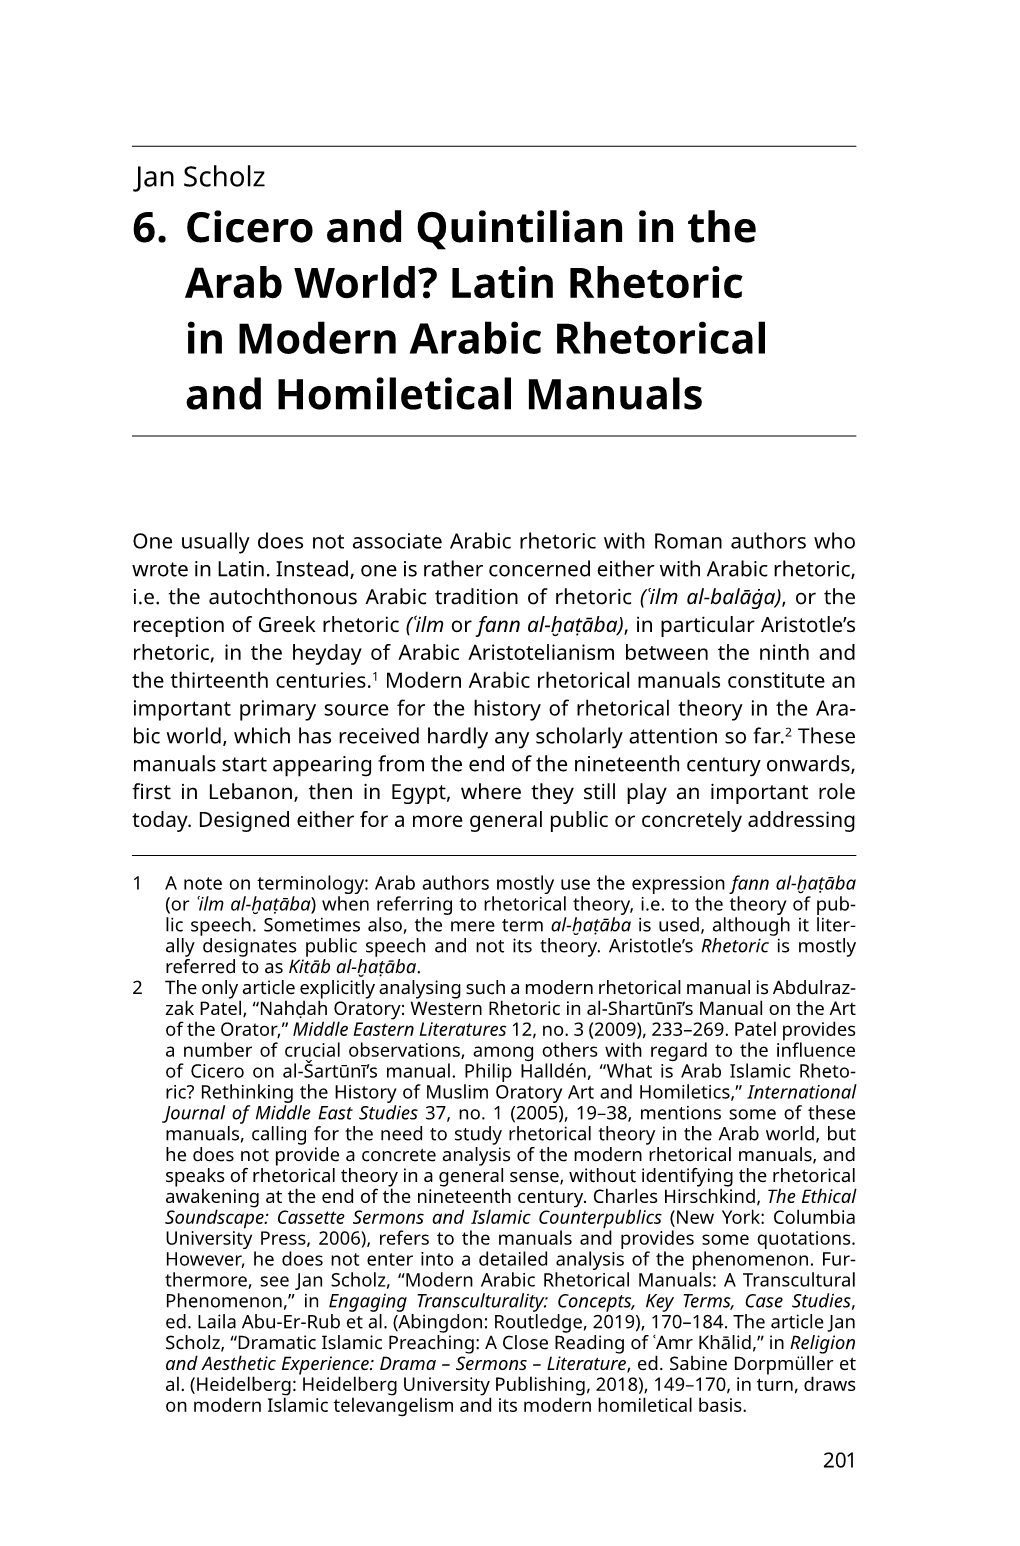 6. Cicero and Quintilian in the Arab World? Latin Rhetoric in Modern Arabic Rhetorical and Homiletical Manuals